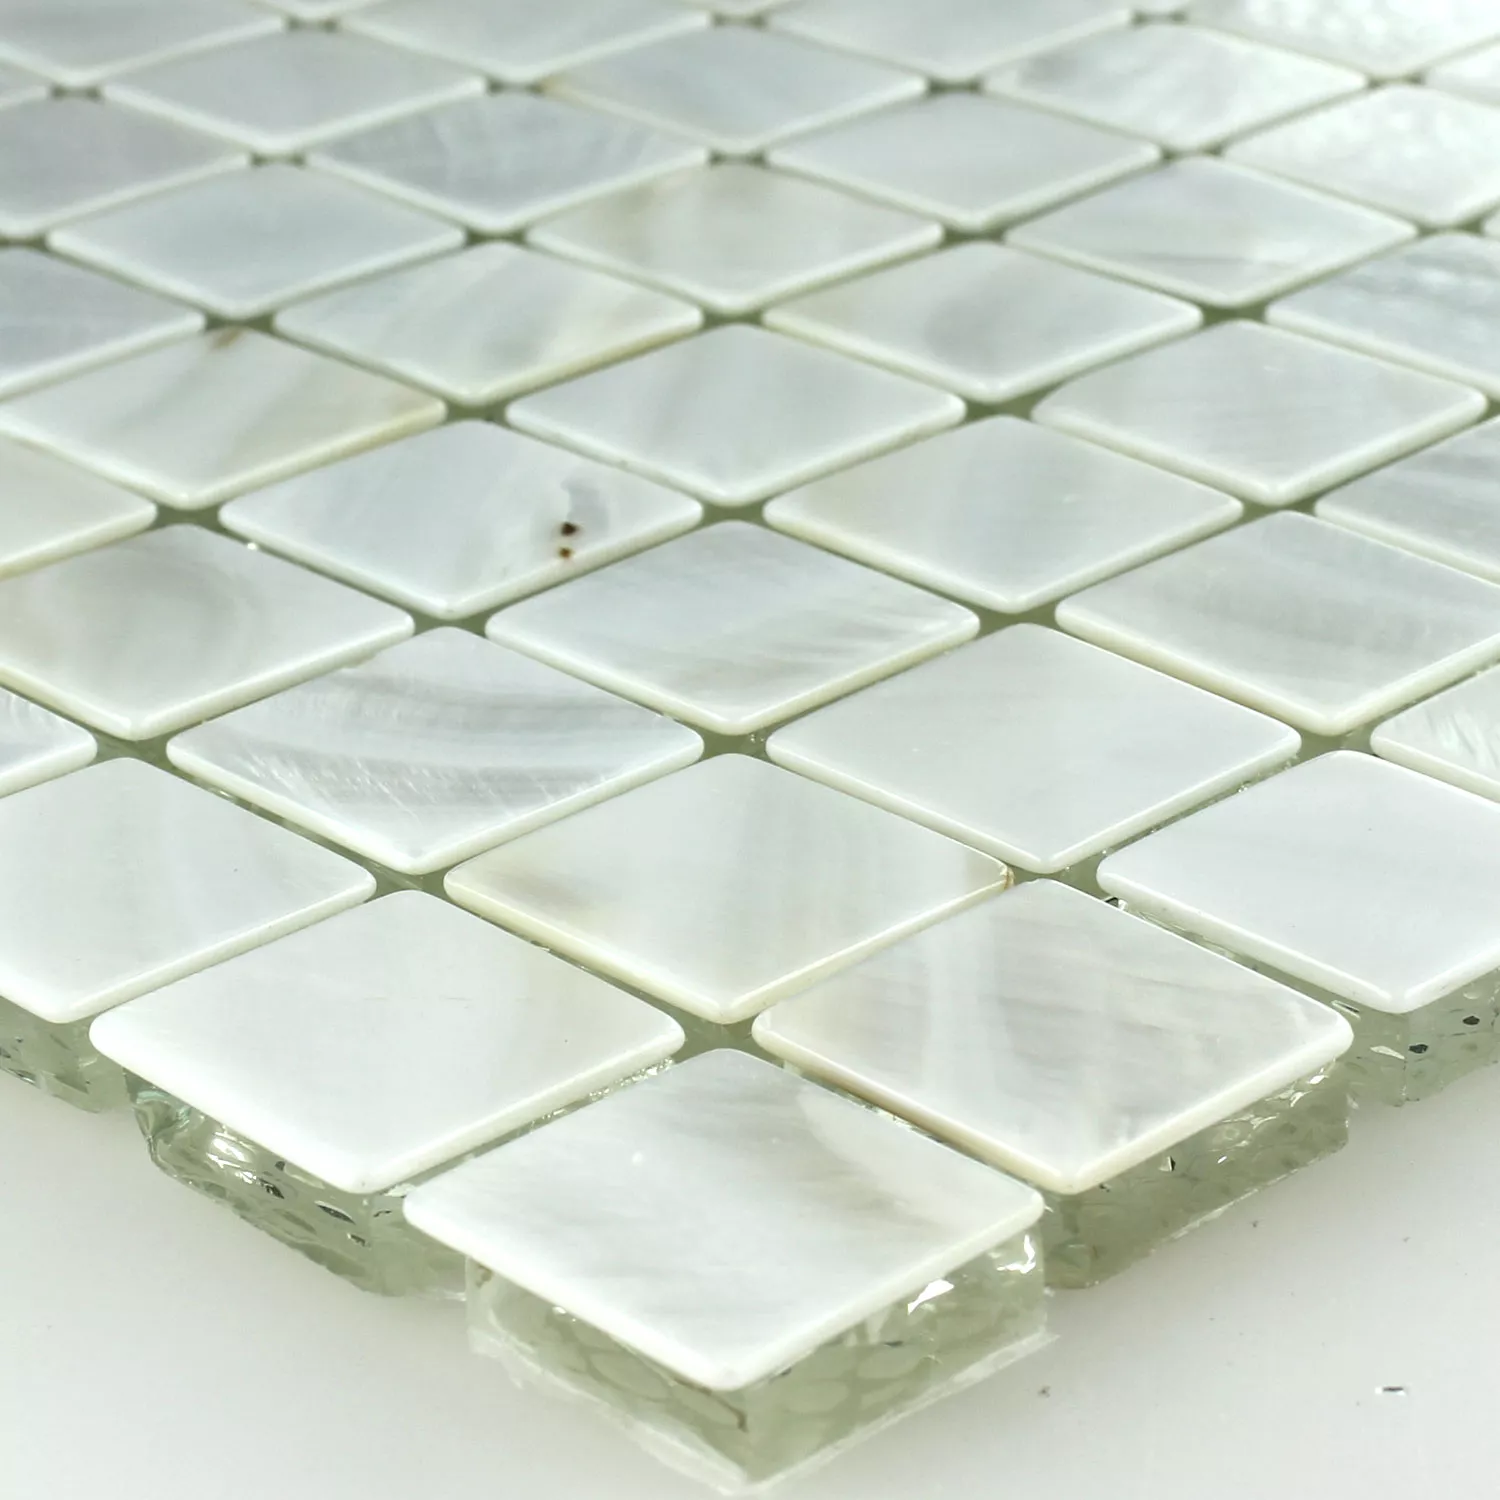 Mozaik Pločice Staklo Efekt Sedefa Bjelokost Bijela 23x23x8mm